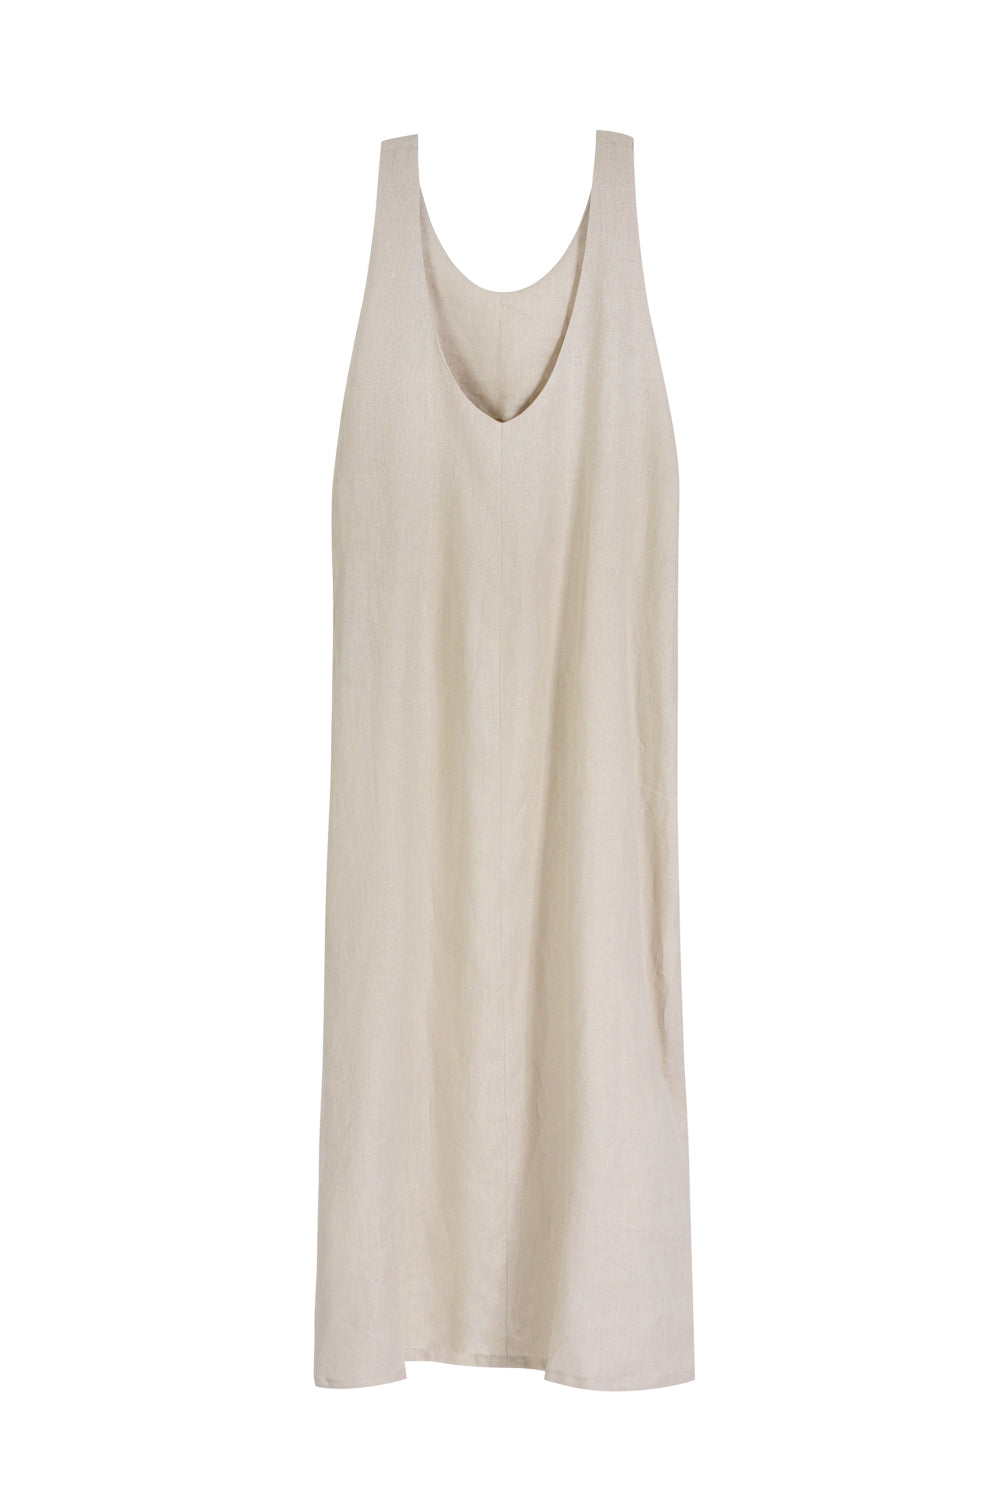 Long-Tailed Sylph | natural linen dress